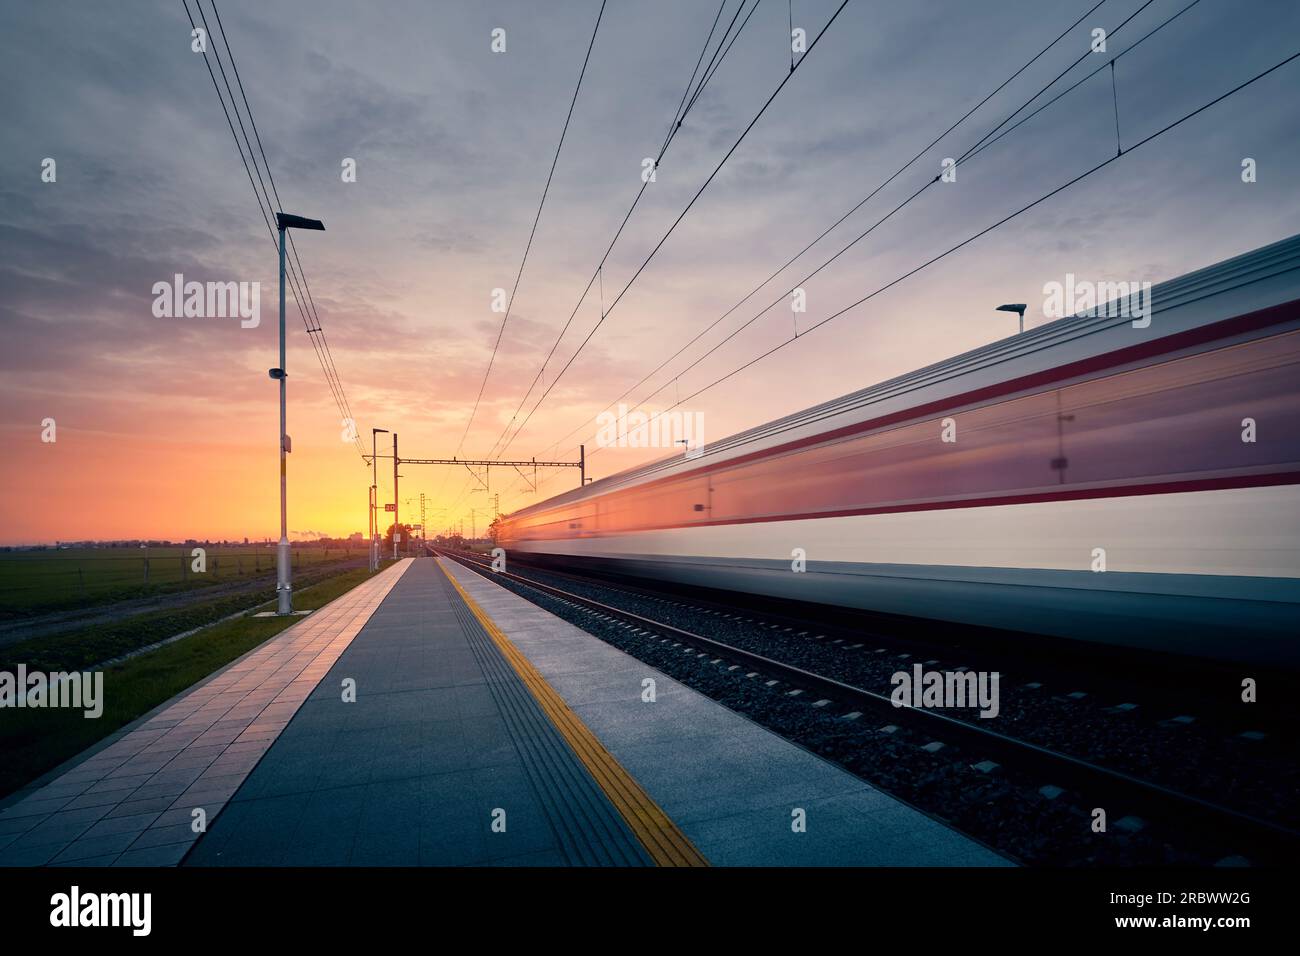 Railway at beautiful dawn. Long exposure of train on railroad track. Moving modern intercity passenger train. Stock Photo